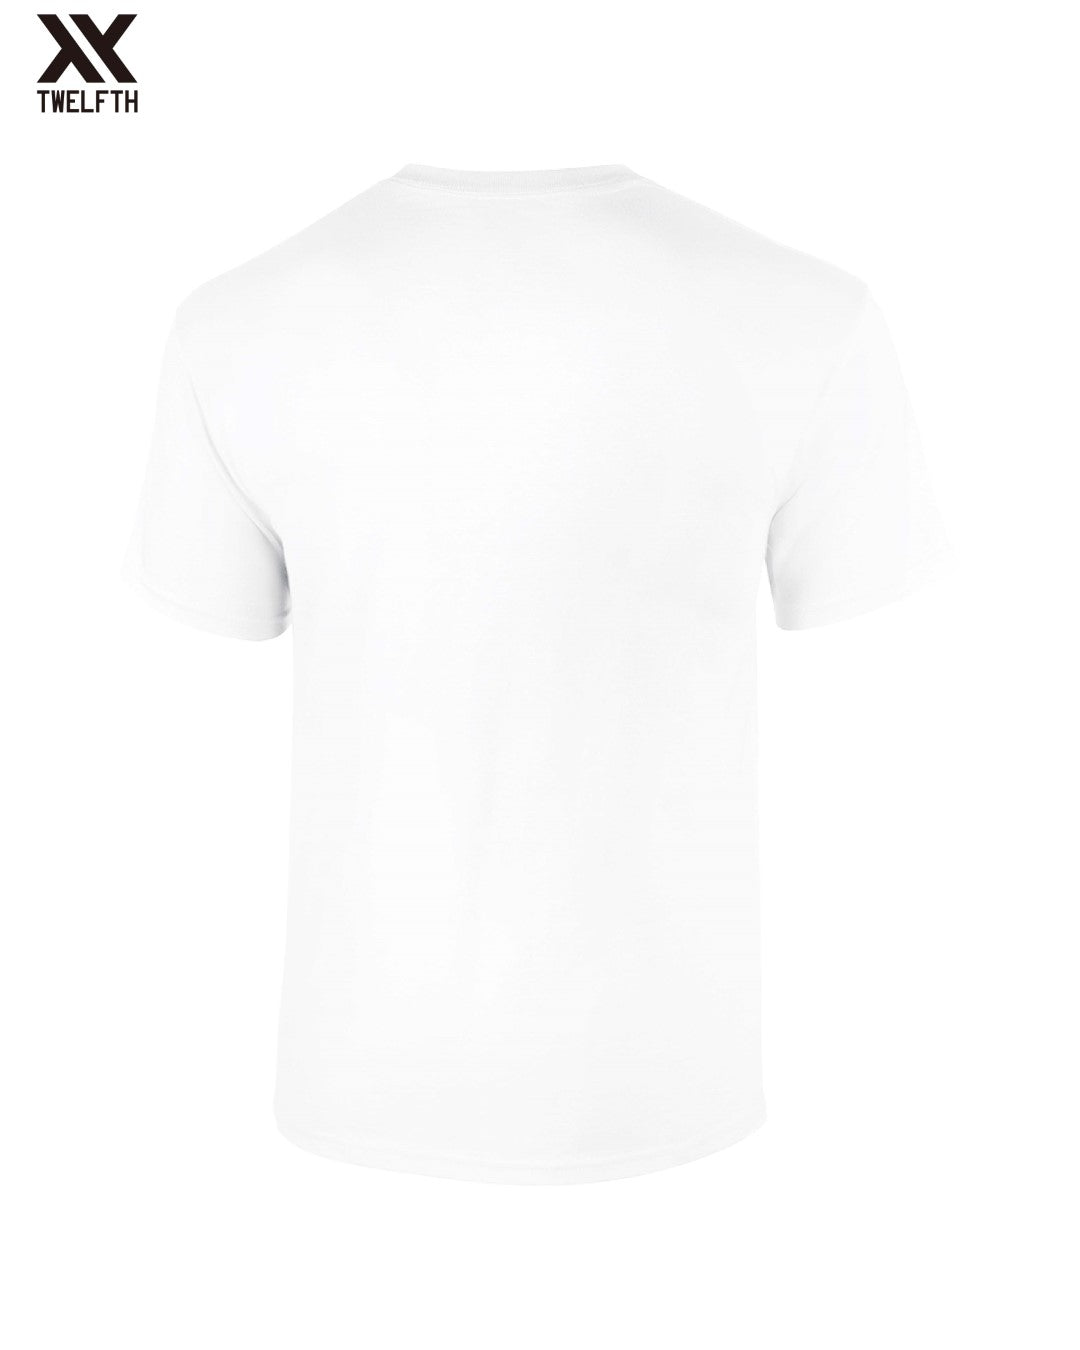 Sampdoria Crest T-Shirt - Mens